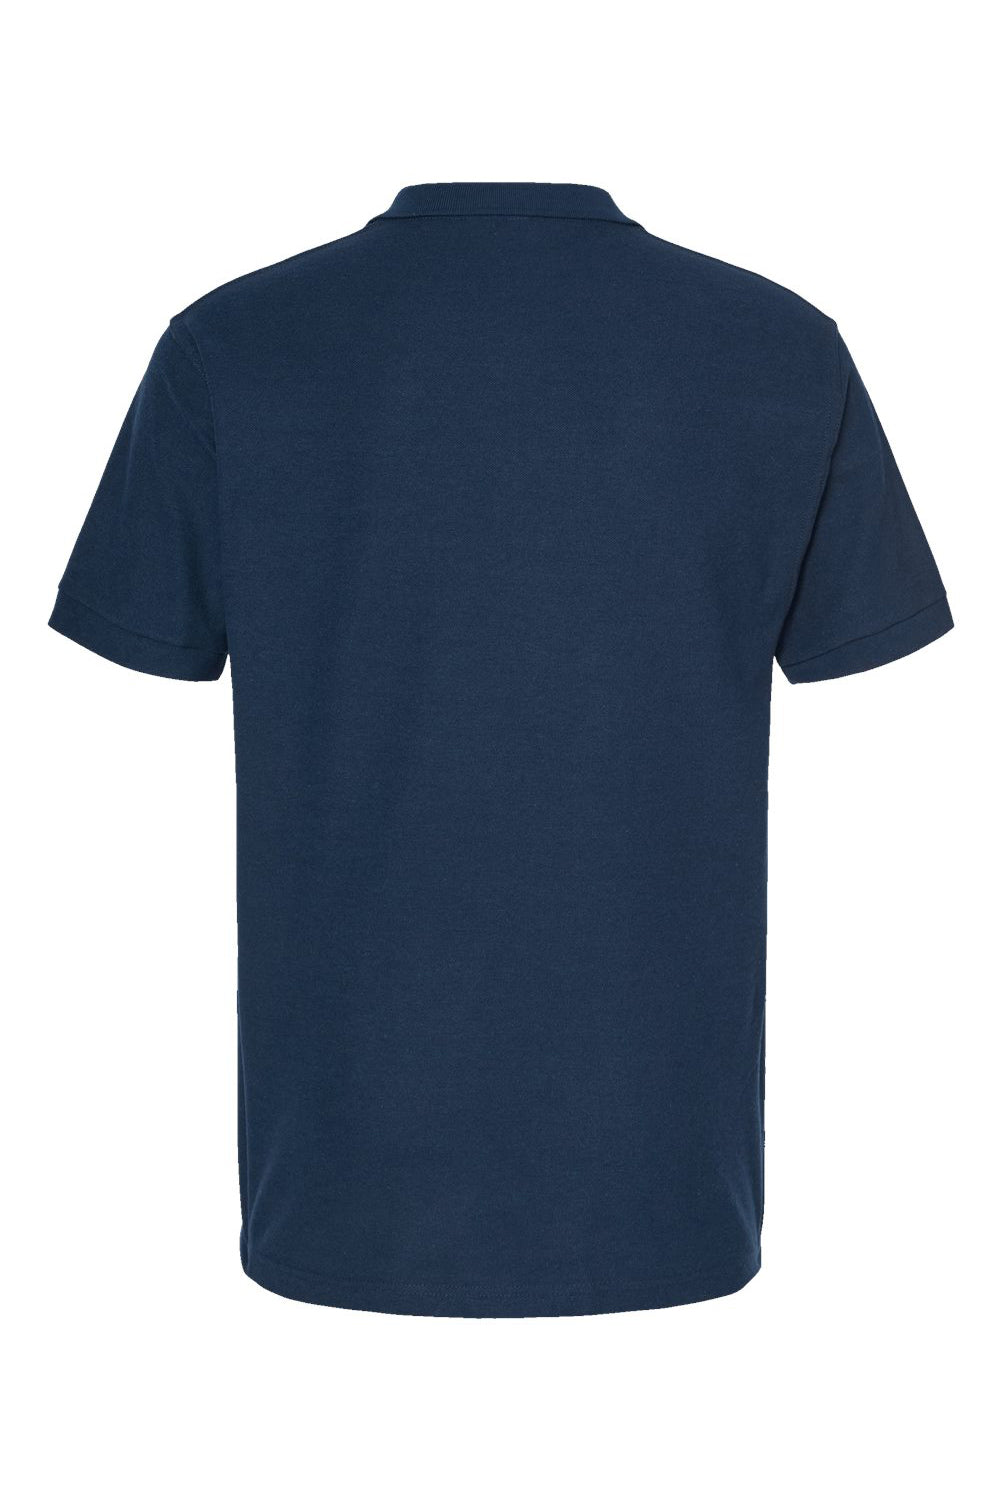 Tultex 400 Mens Sport Shirt Sleeve Polo Shirt Navy Blue Flat Back